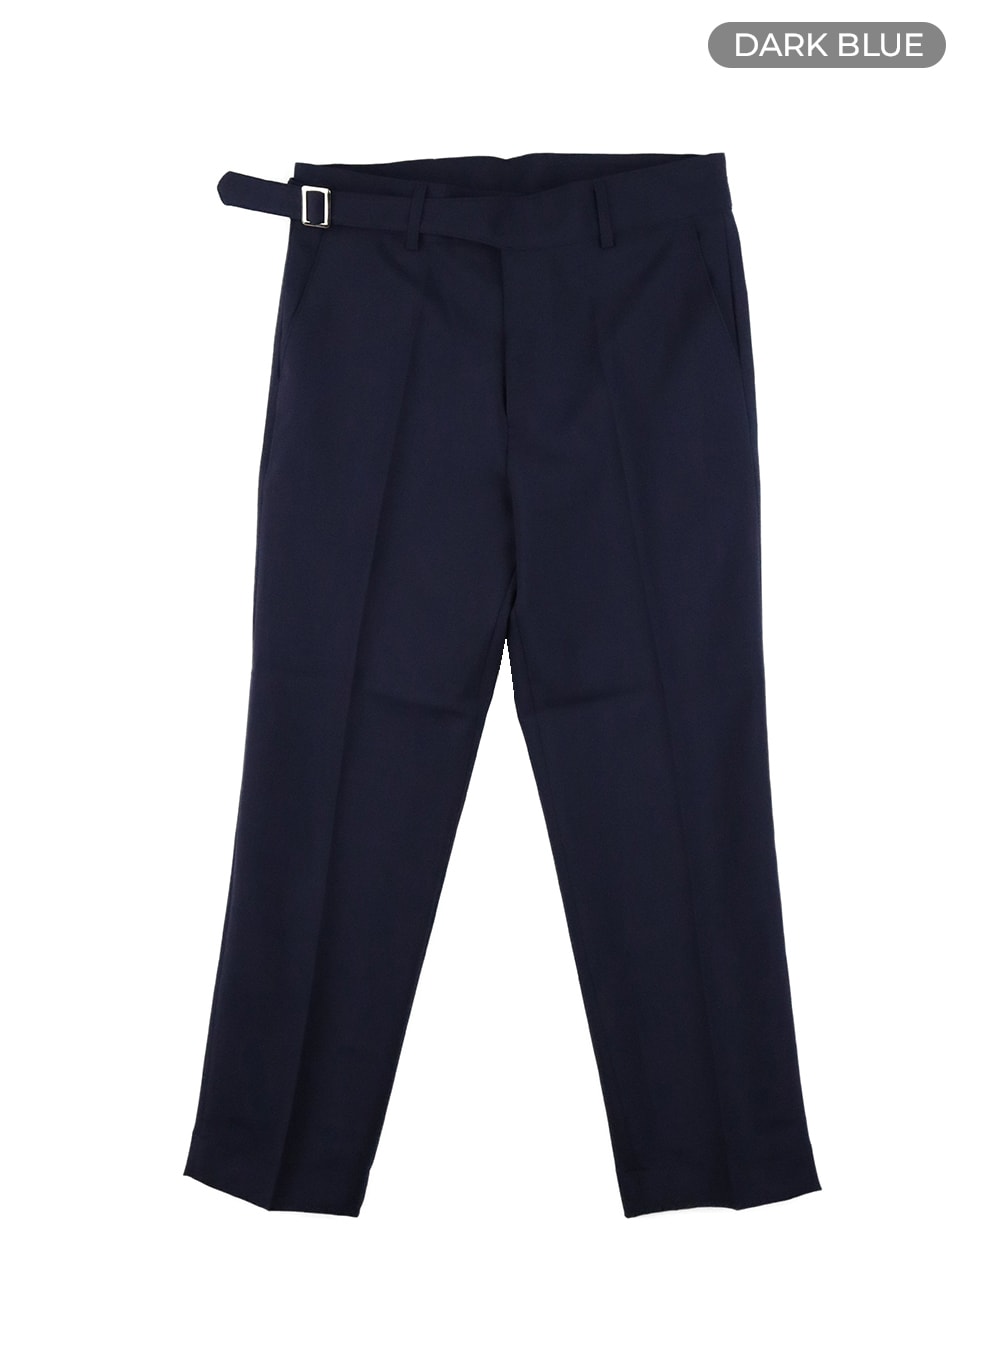 mens-slim-fit-tailored-pants-ia401 / Dark blue